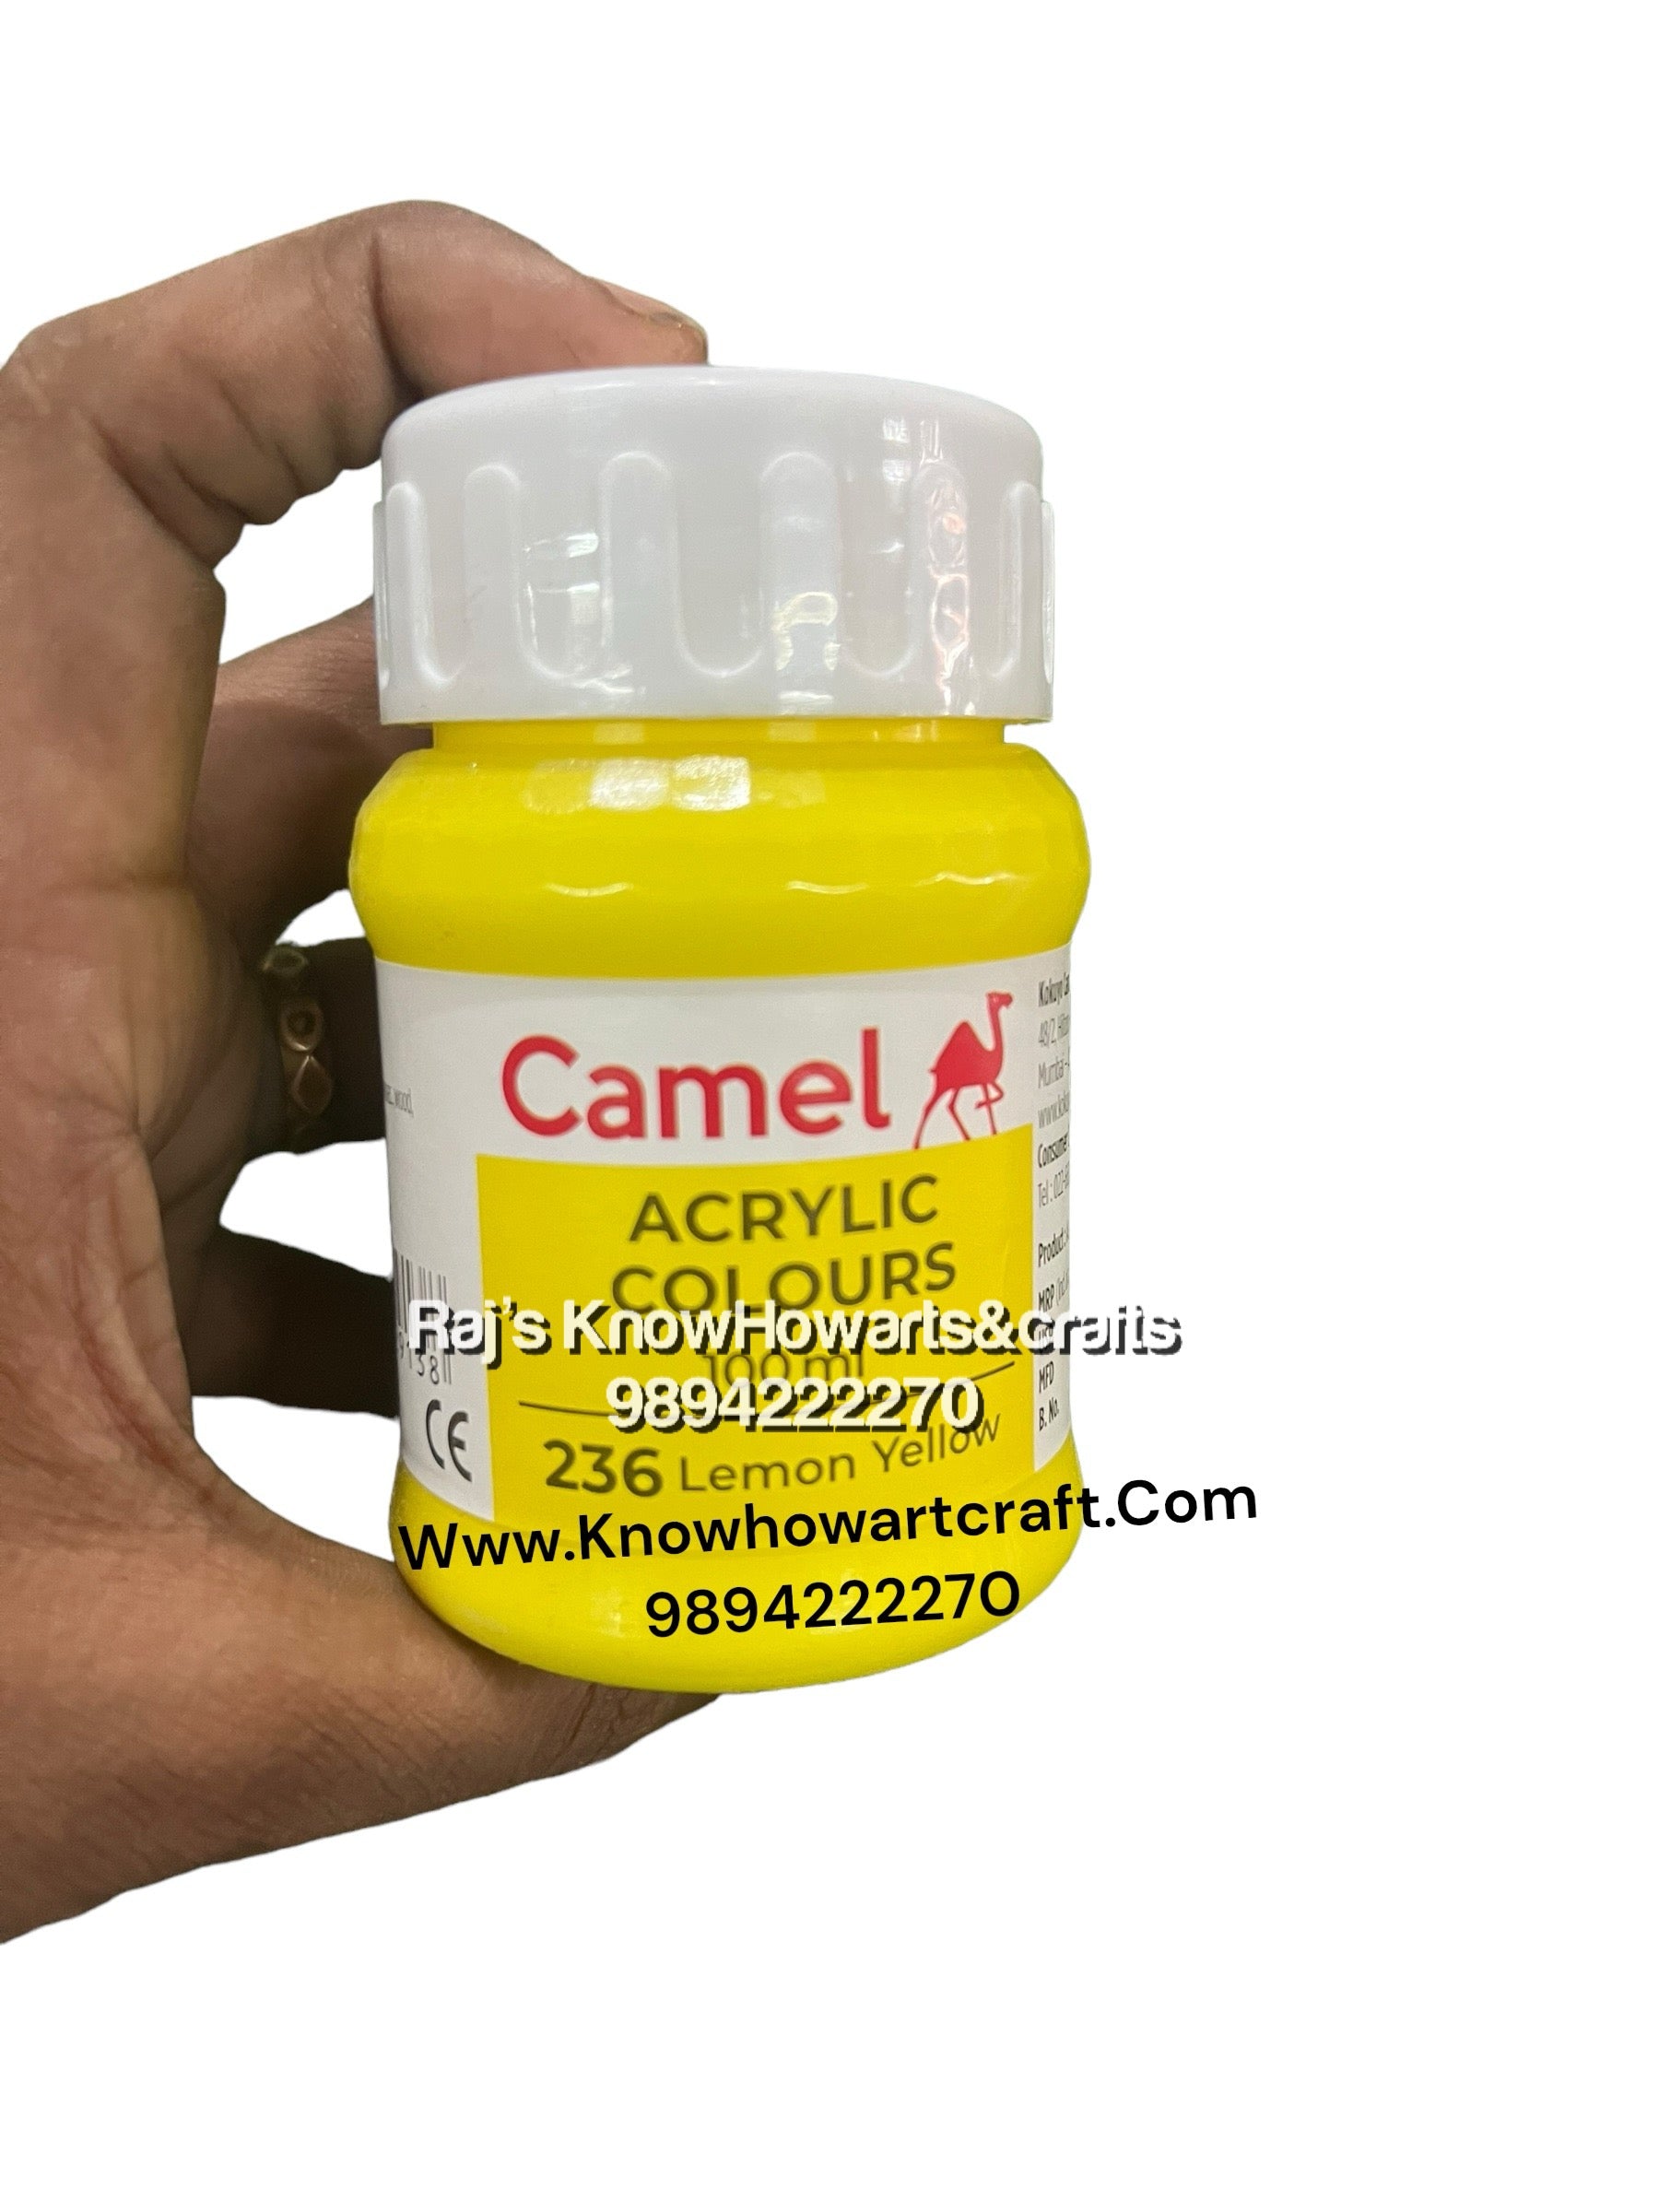 Camel Acrylic colours lemon yellow 236 100 ml